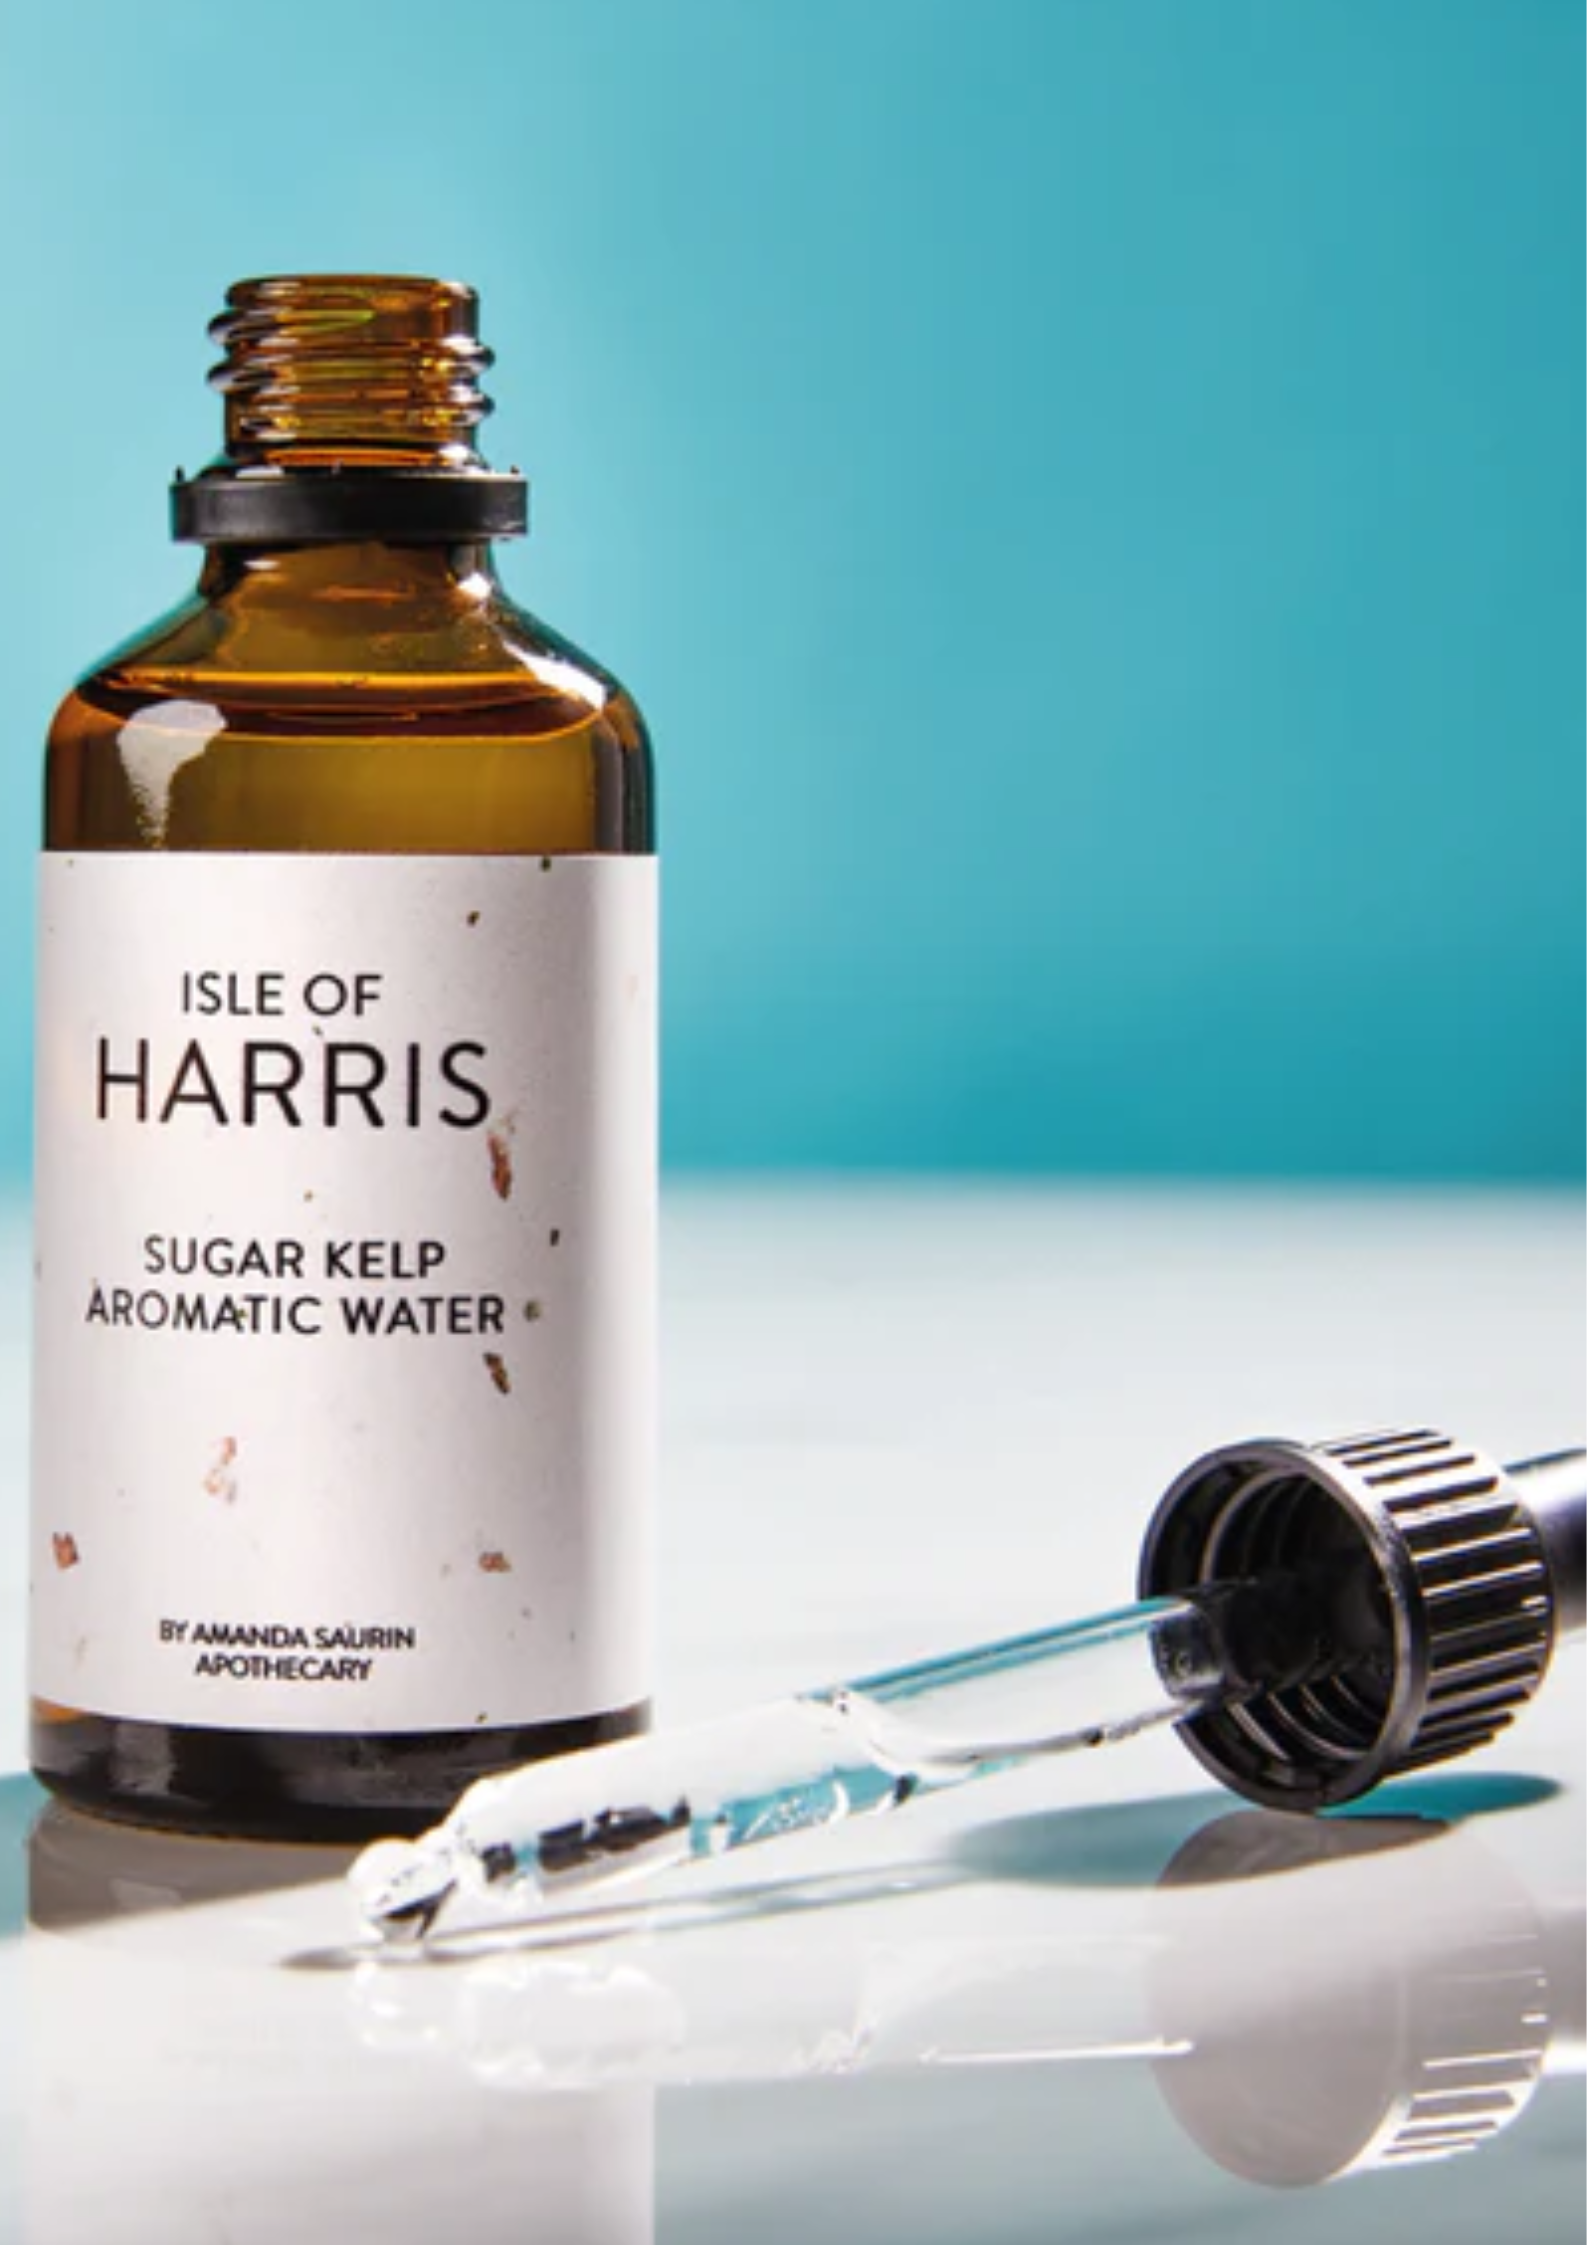 Bottle of Isle of Harris Sugar Kelp Aromatic Water - The Spirits Room